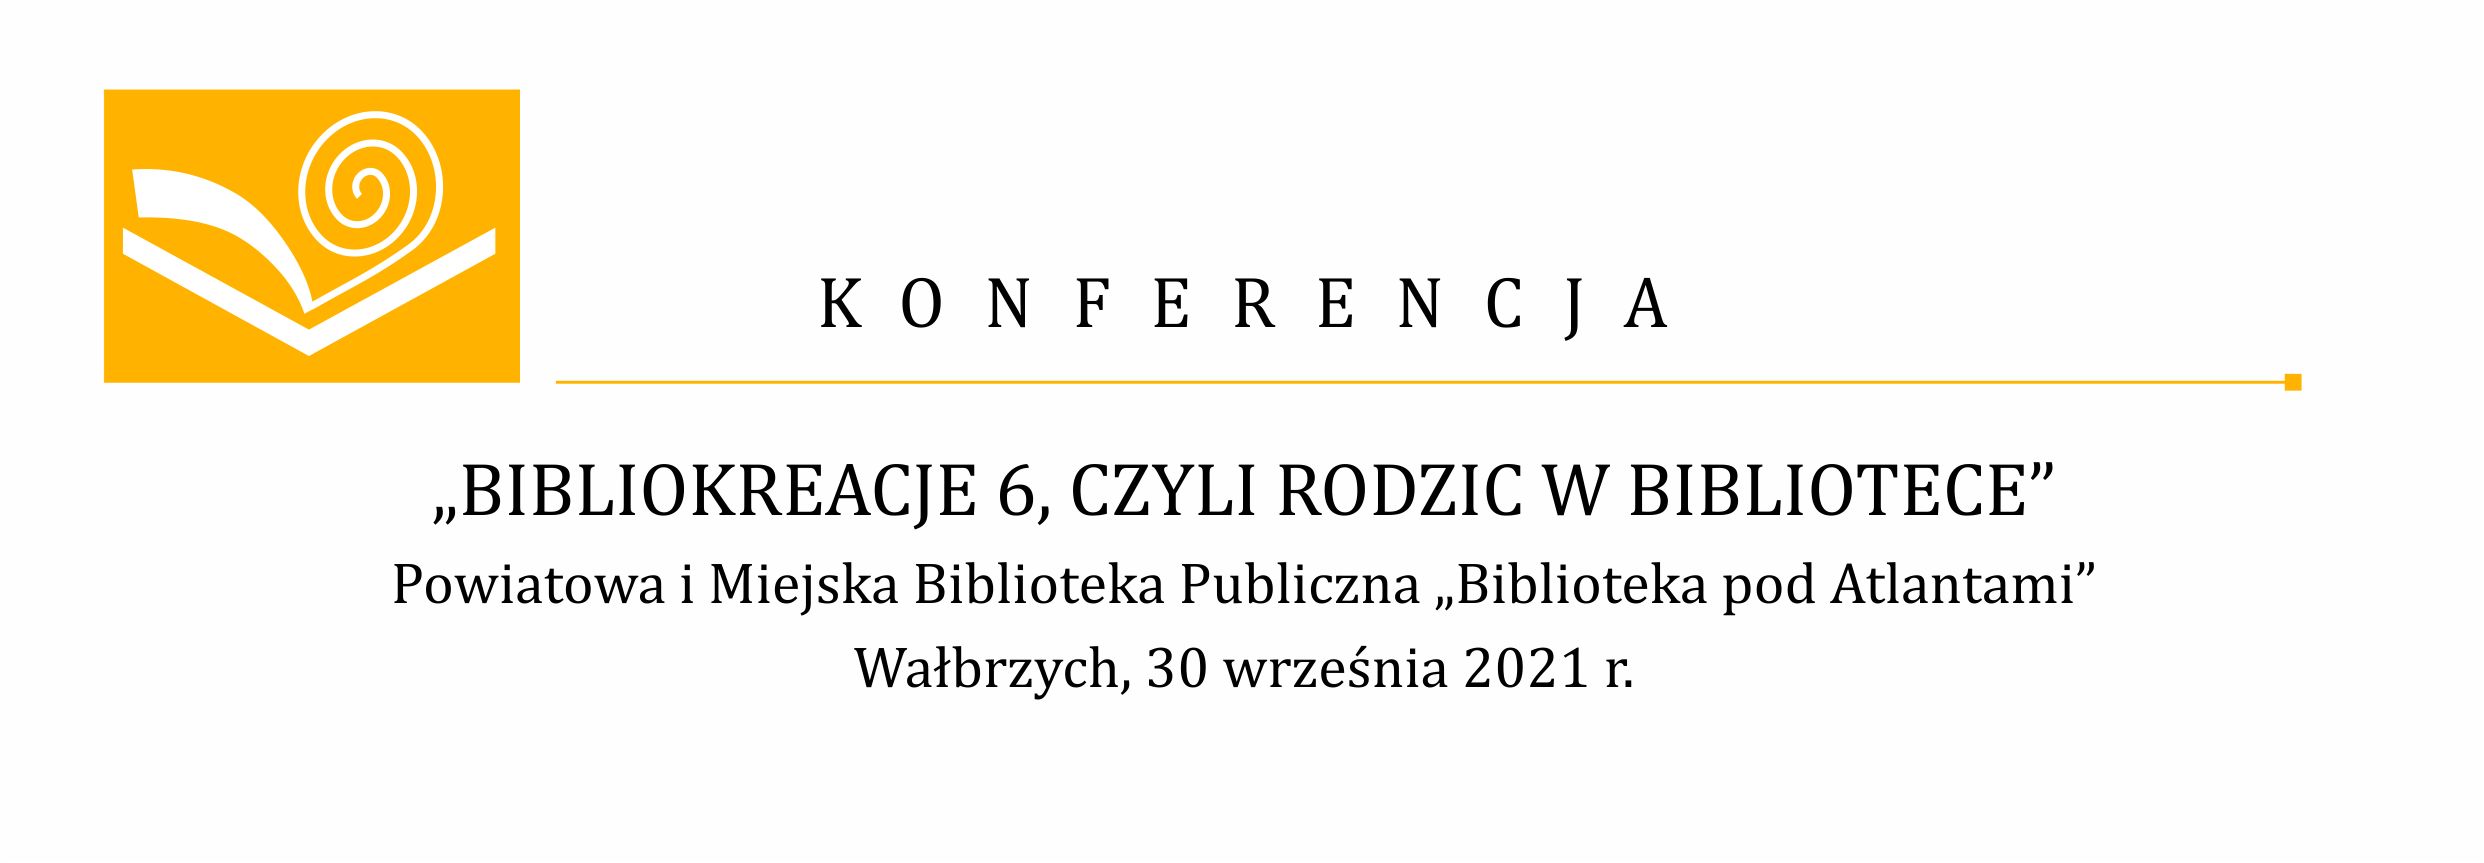 Konferencja Bibliokreacje